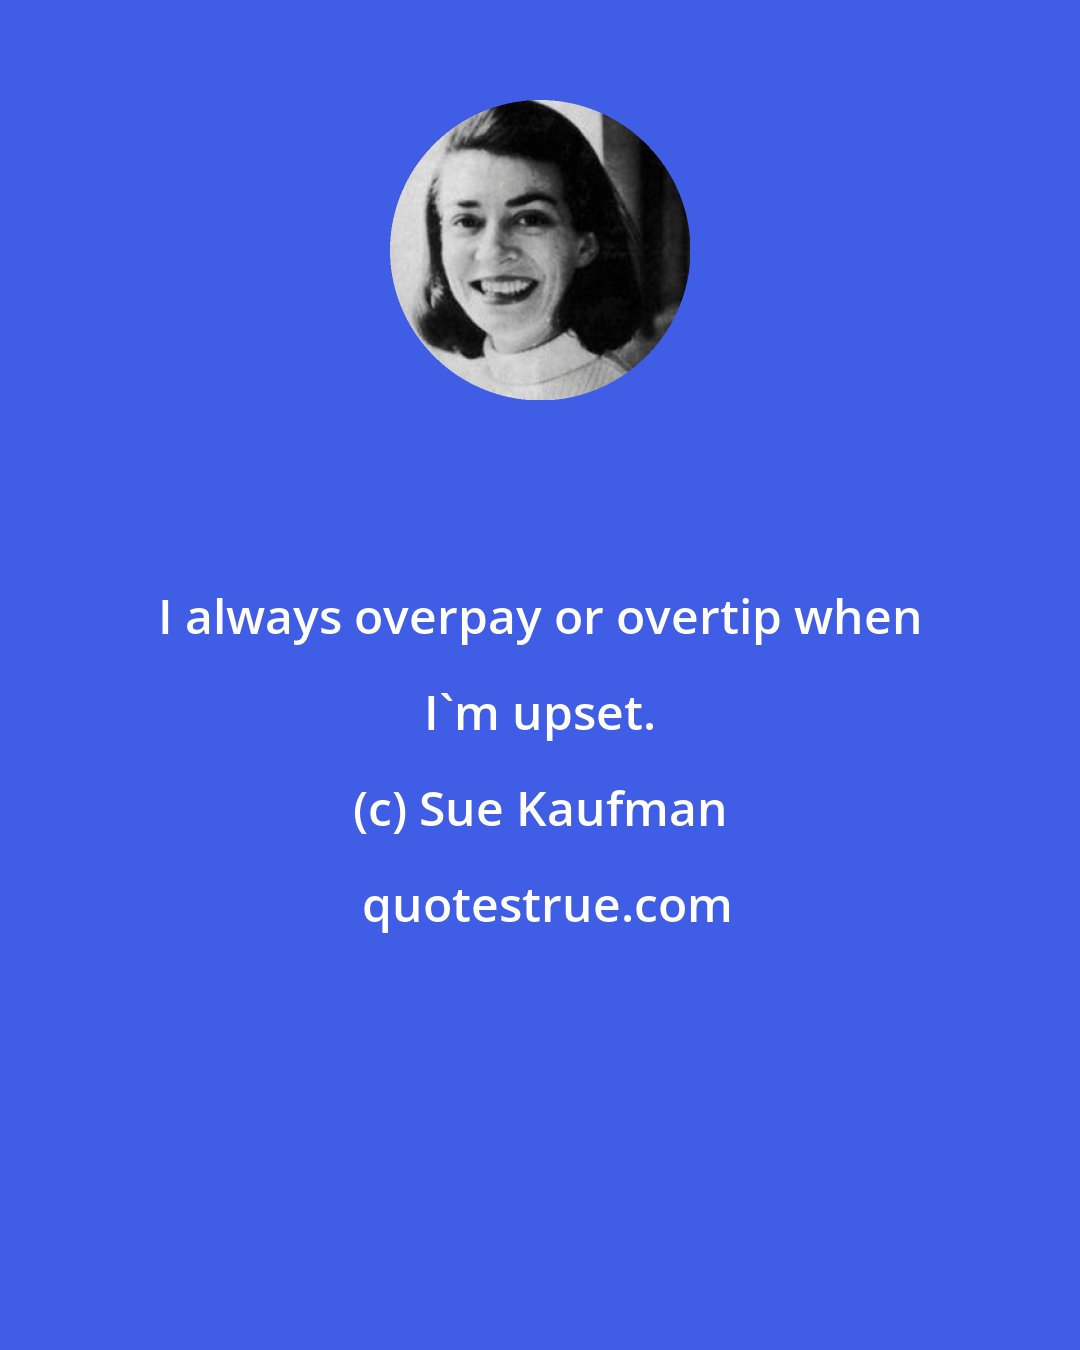 Sue Kaufman: I always overpay or overtip when I'm upset.